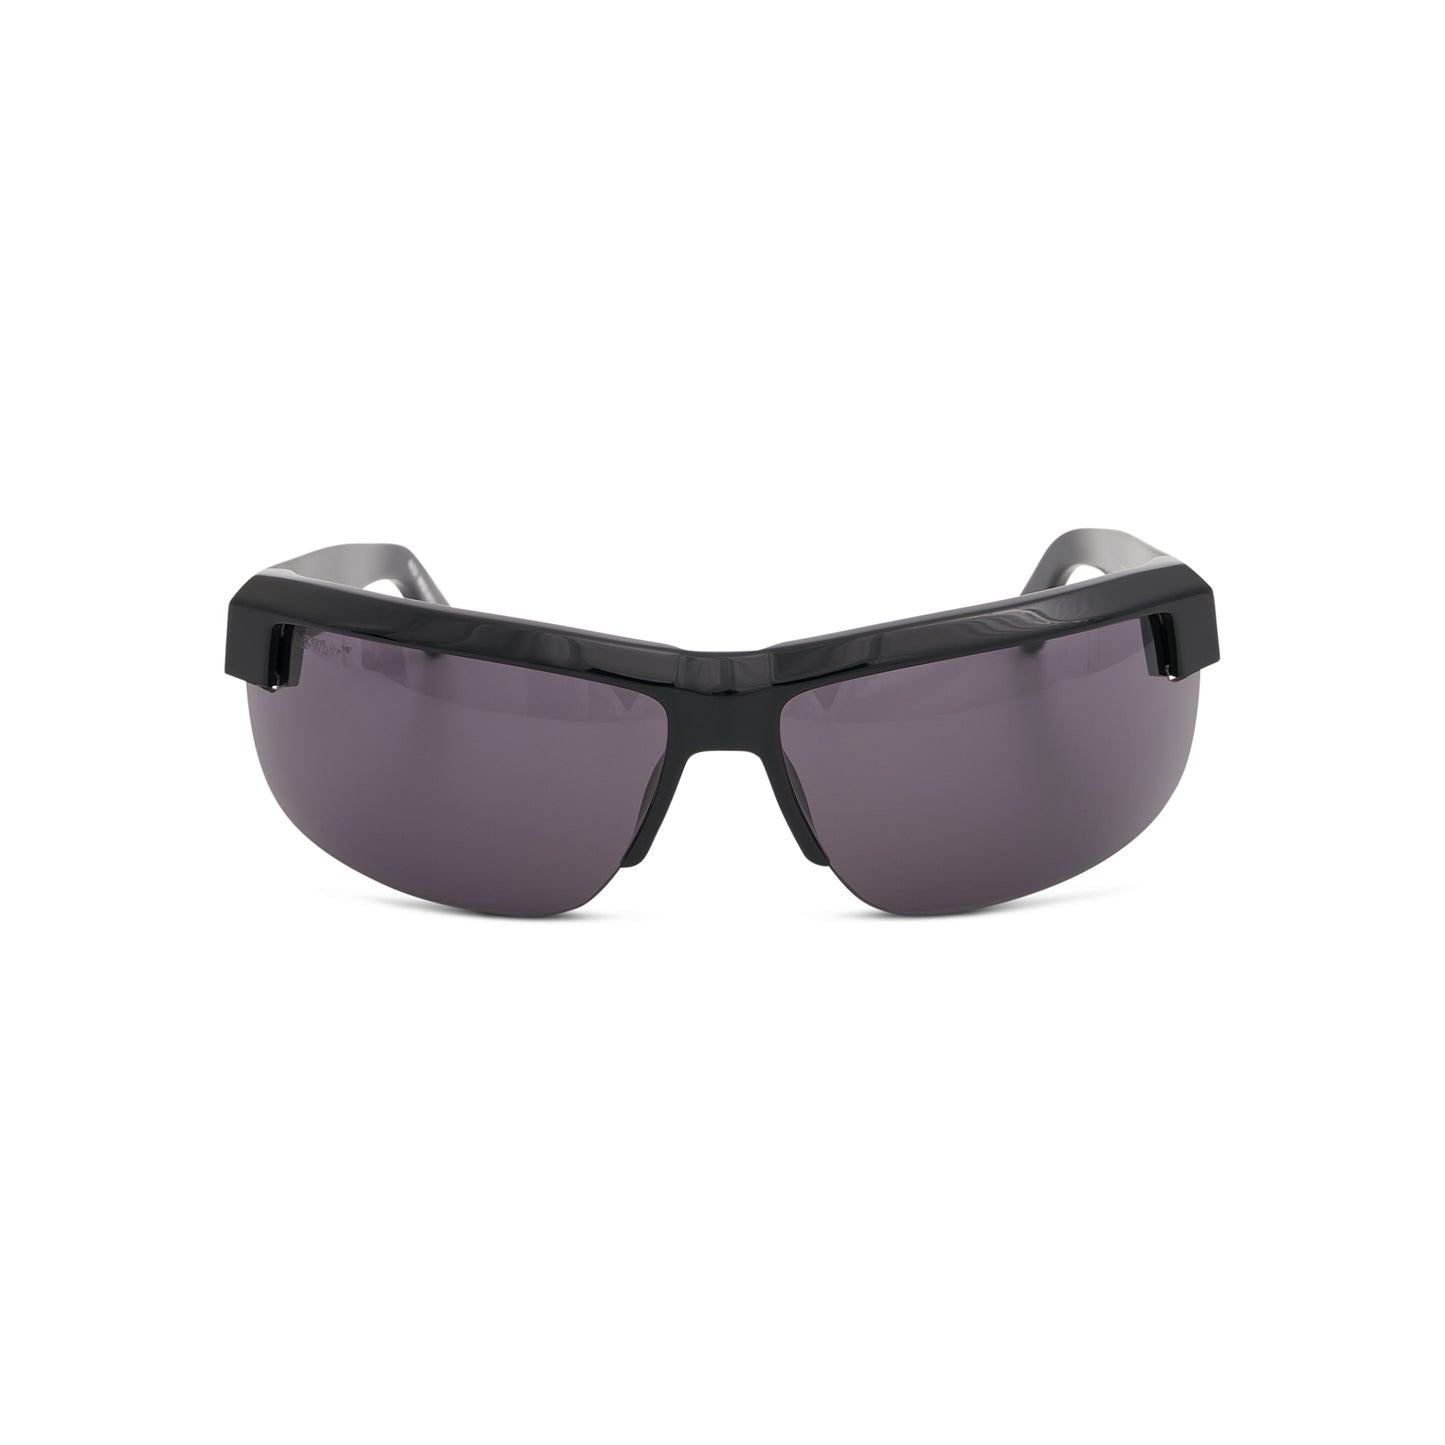 Toledo Sunglasses in Black/Dark Grey